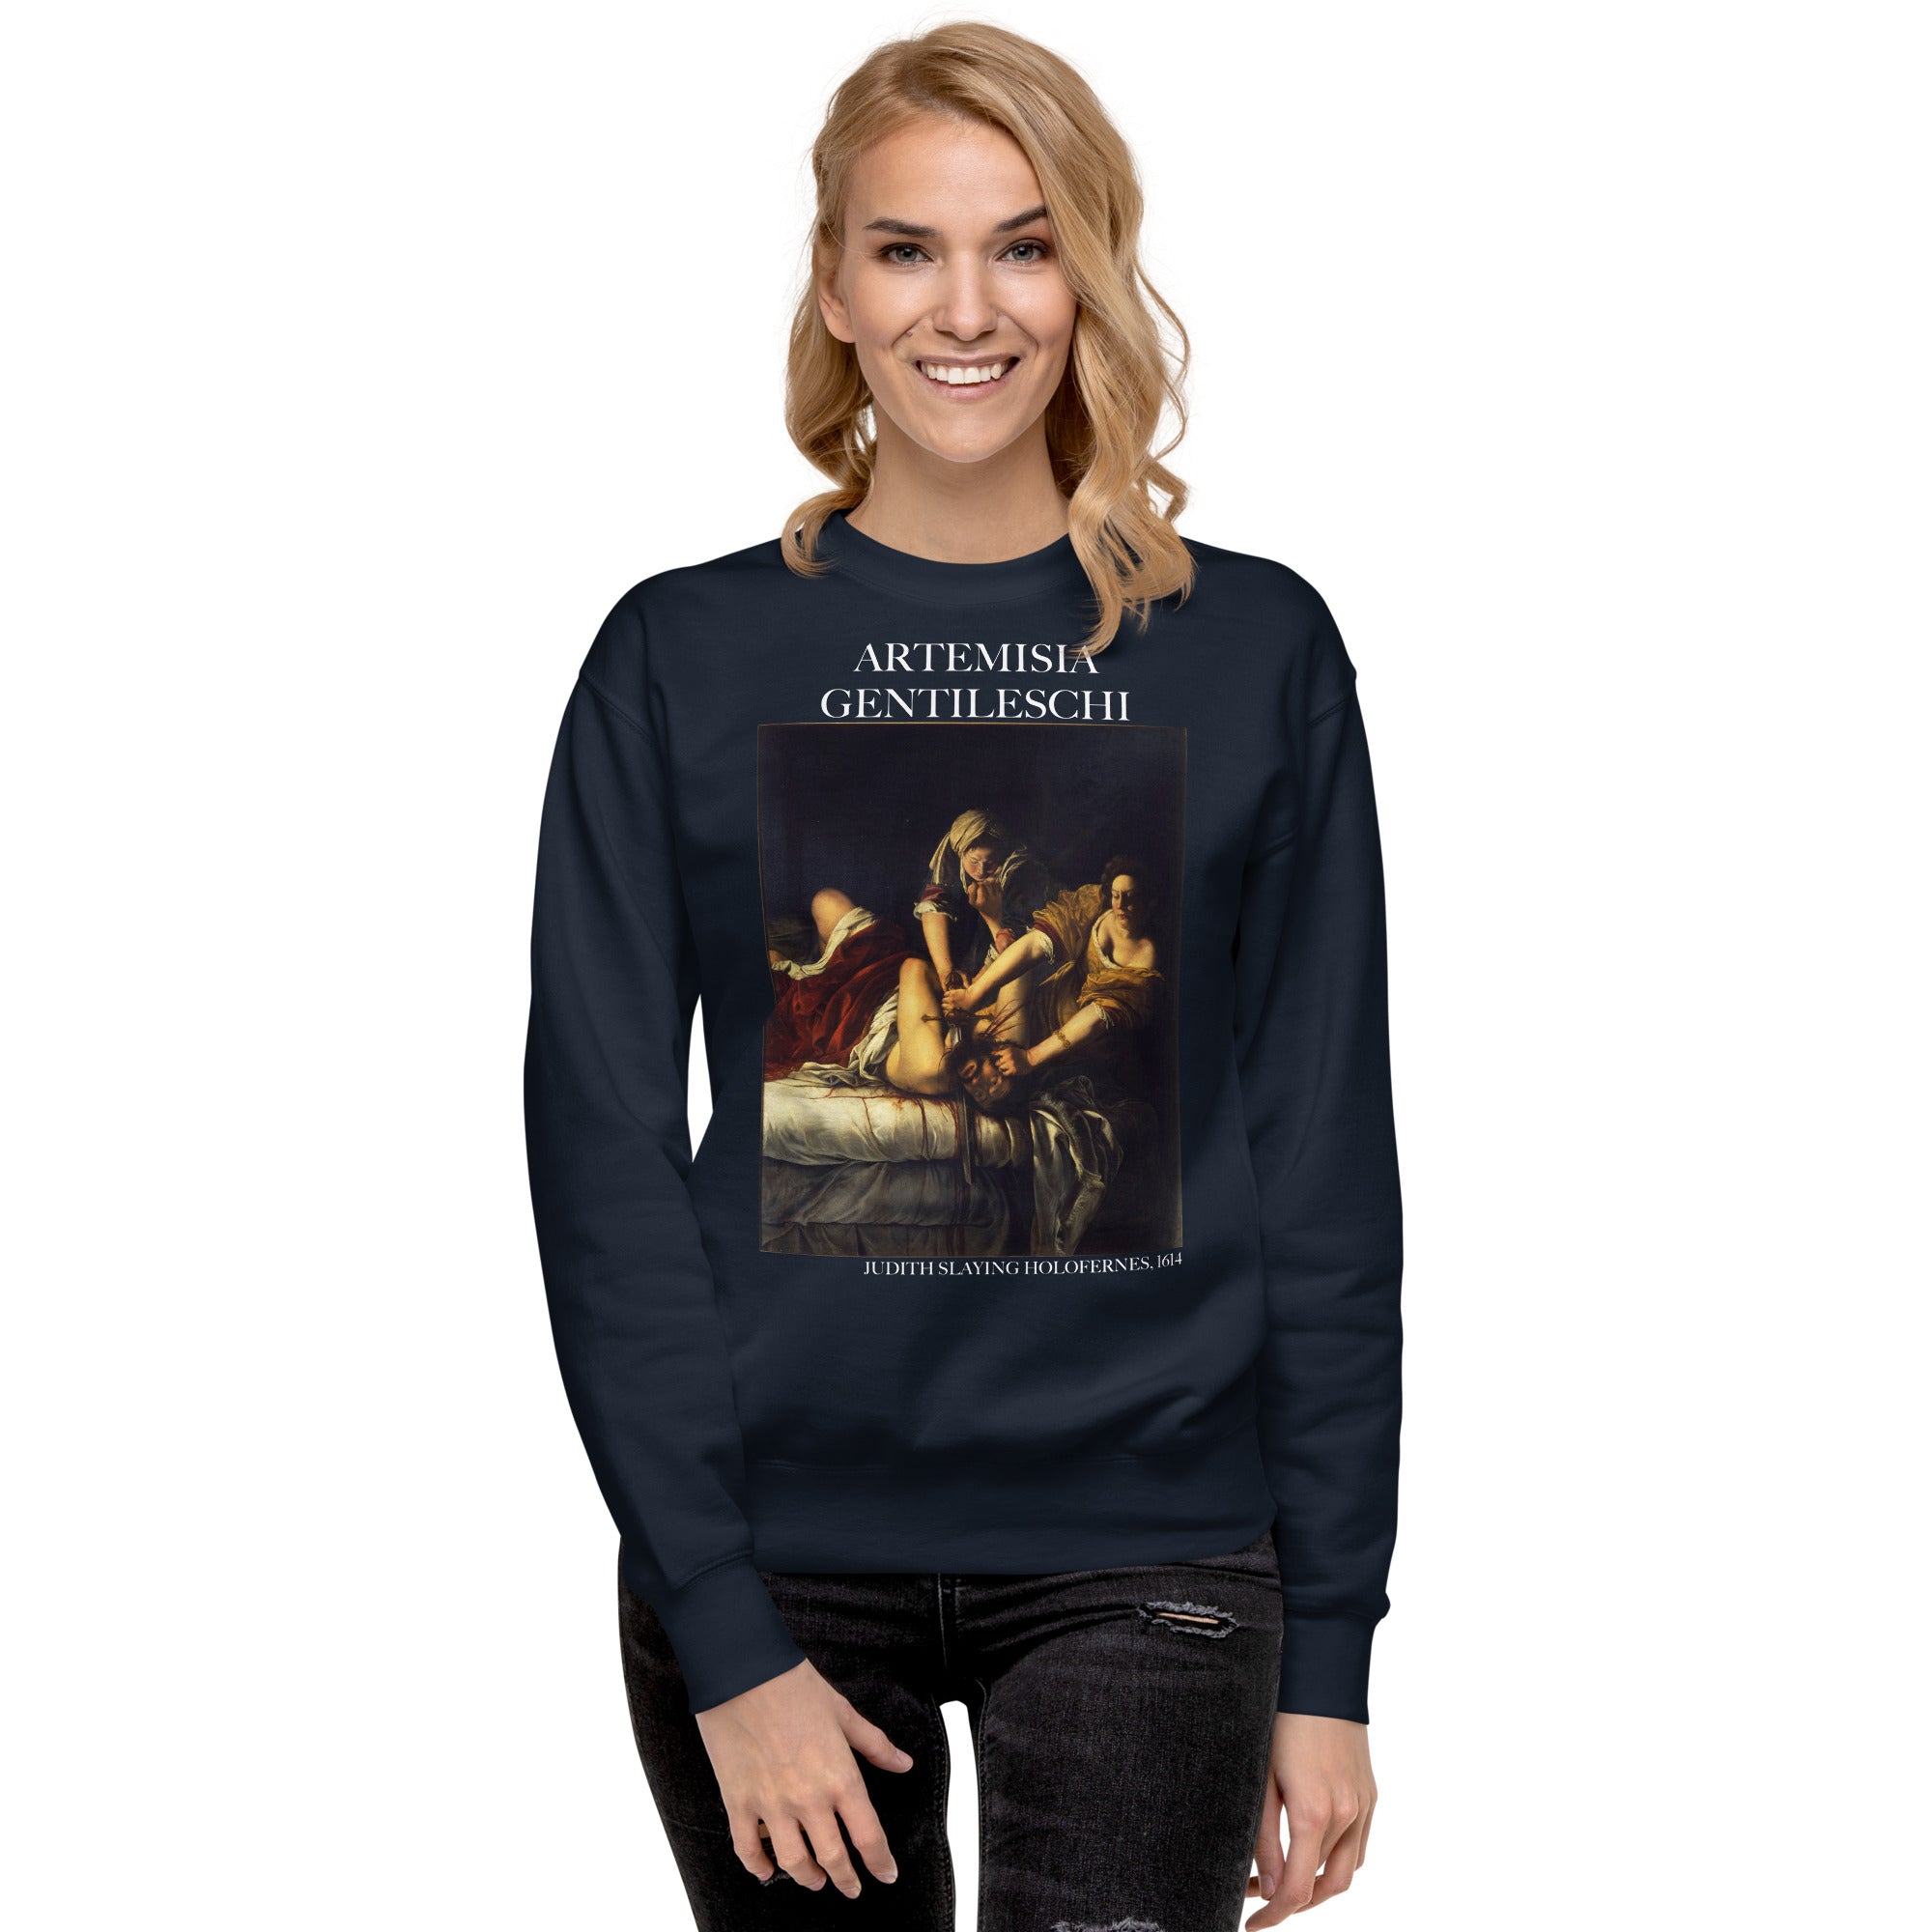 Artemisia Gentileschi 'Judith Slaying Holofernes' Famous Painting Sweatshirt | Unisex Premium Sweatshirt